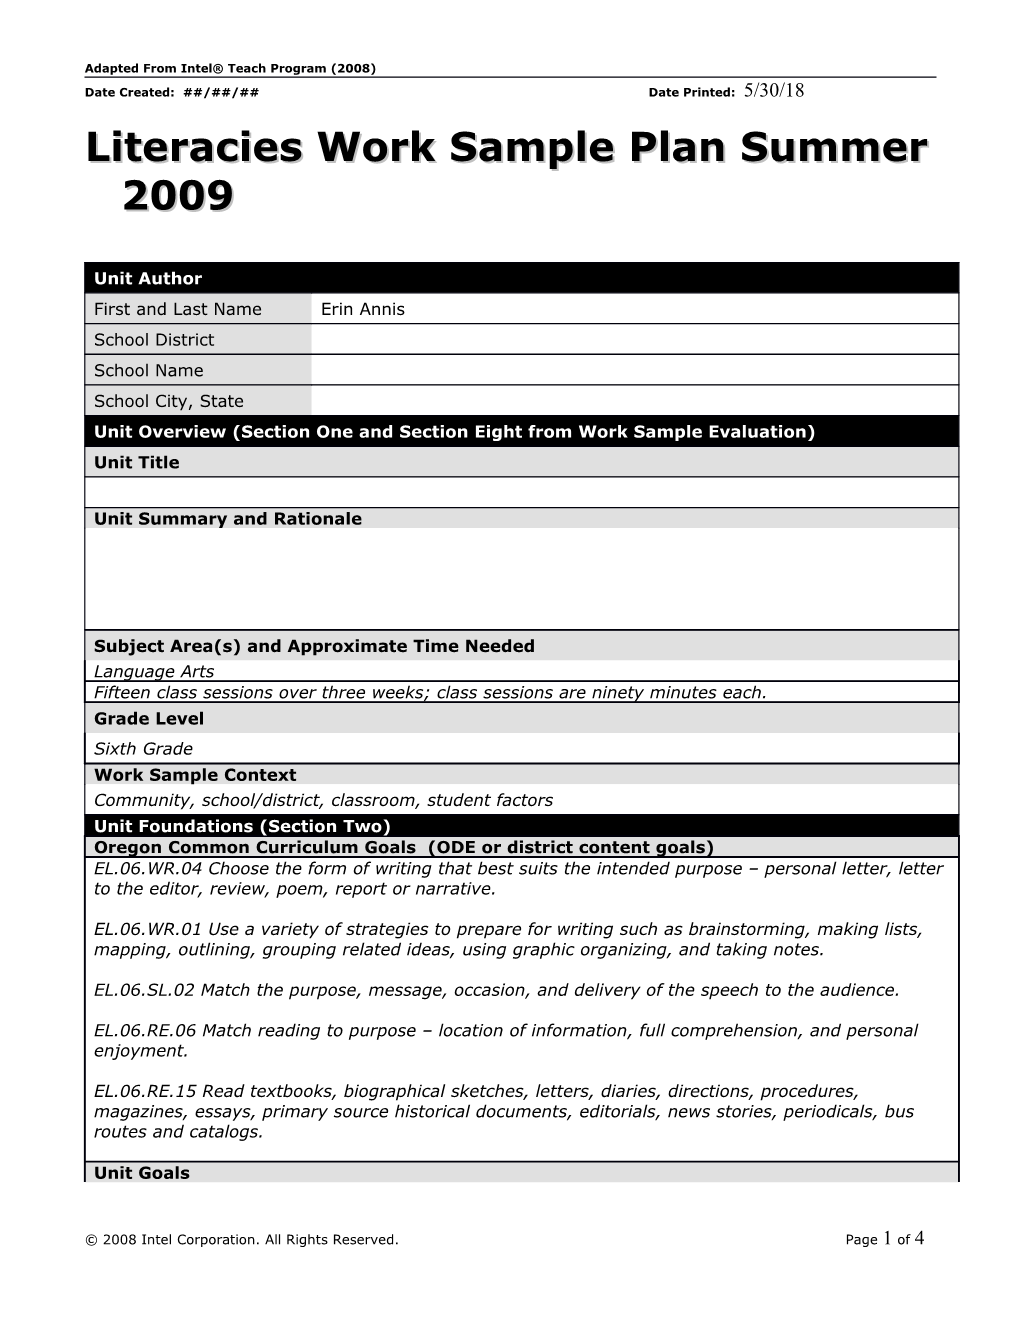 Literacies Work Sample Plan Summer 2009